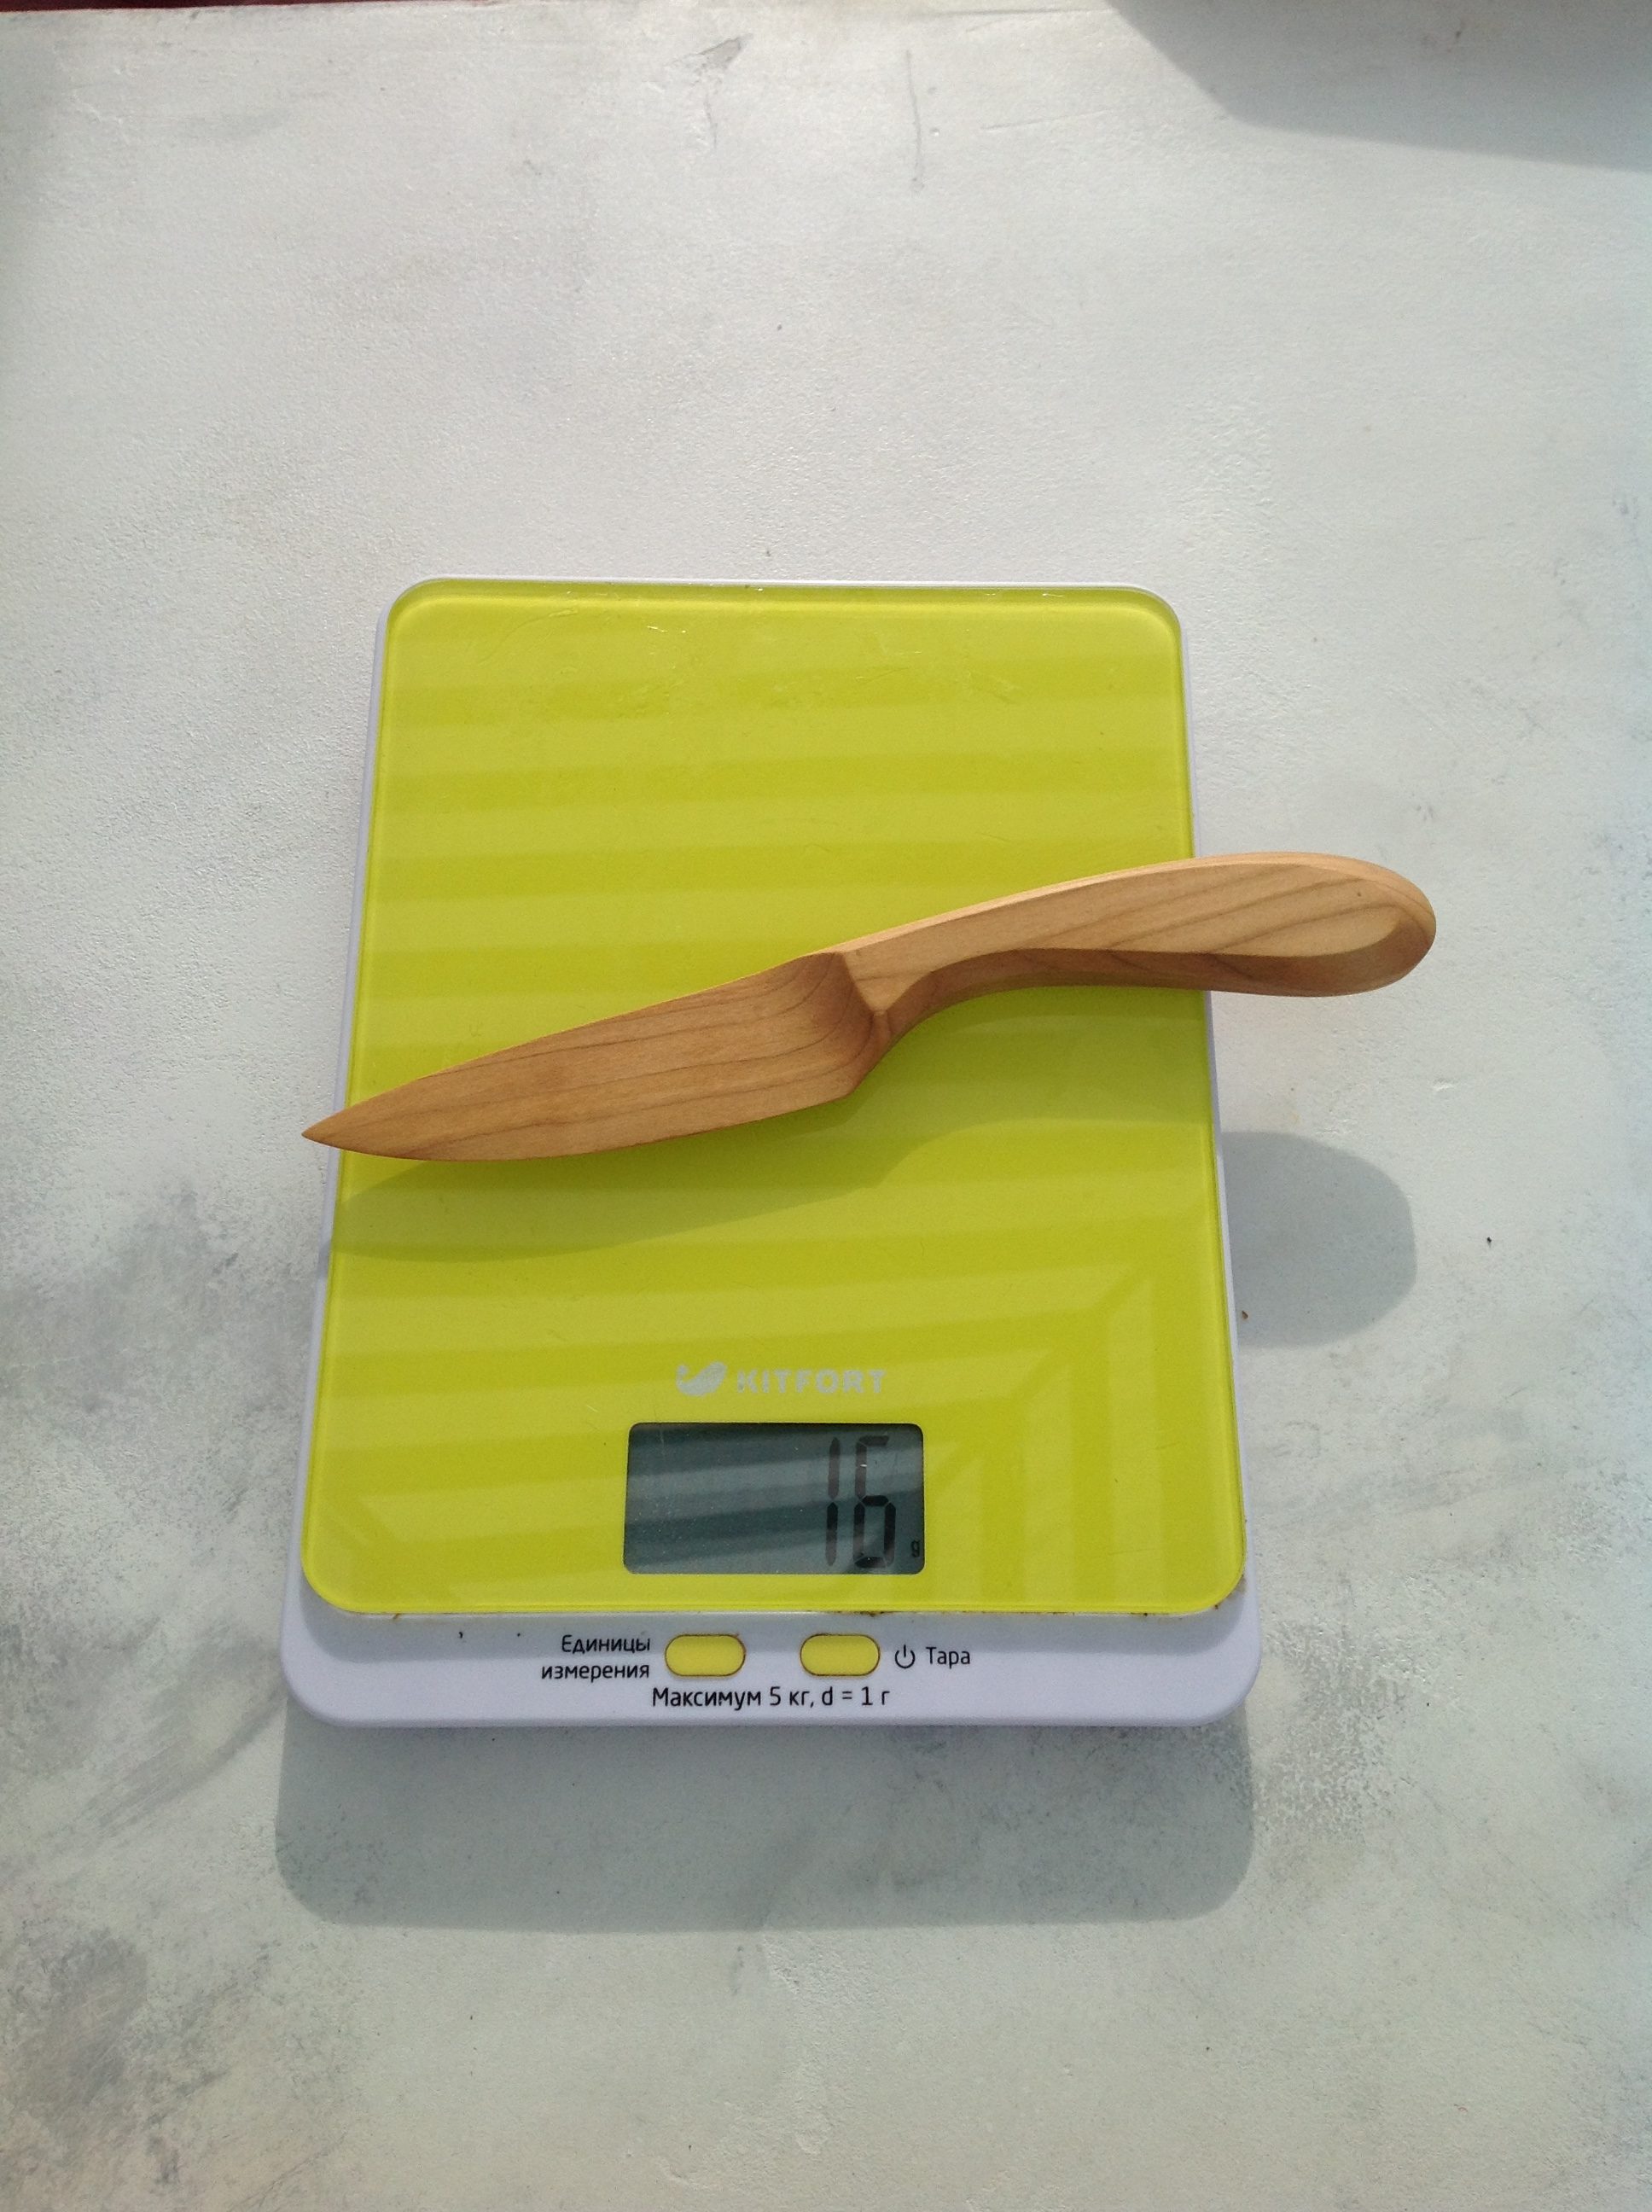 Berapa berat pisau kayu suvenir berukuran sedang?